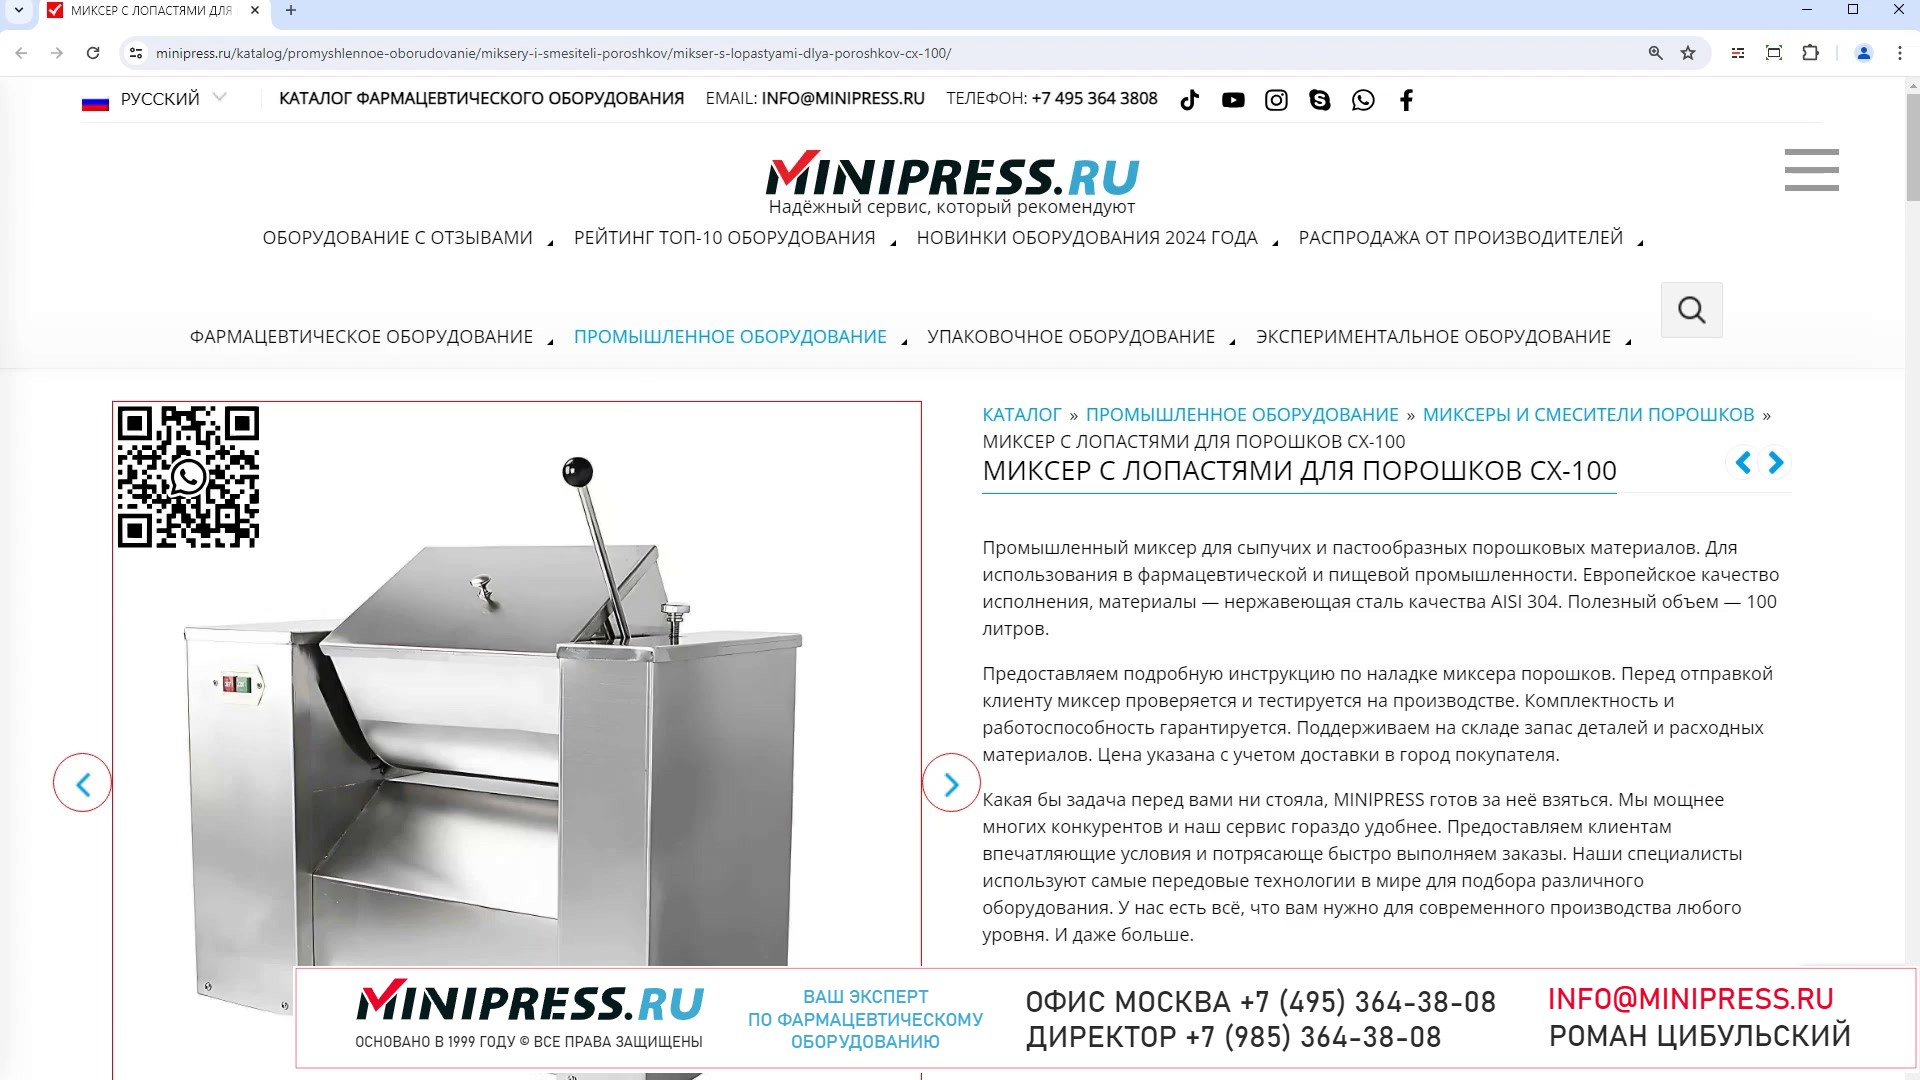 Minipress.ru Миксер с лопастями для порошков CX-100